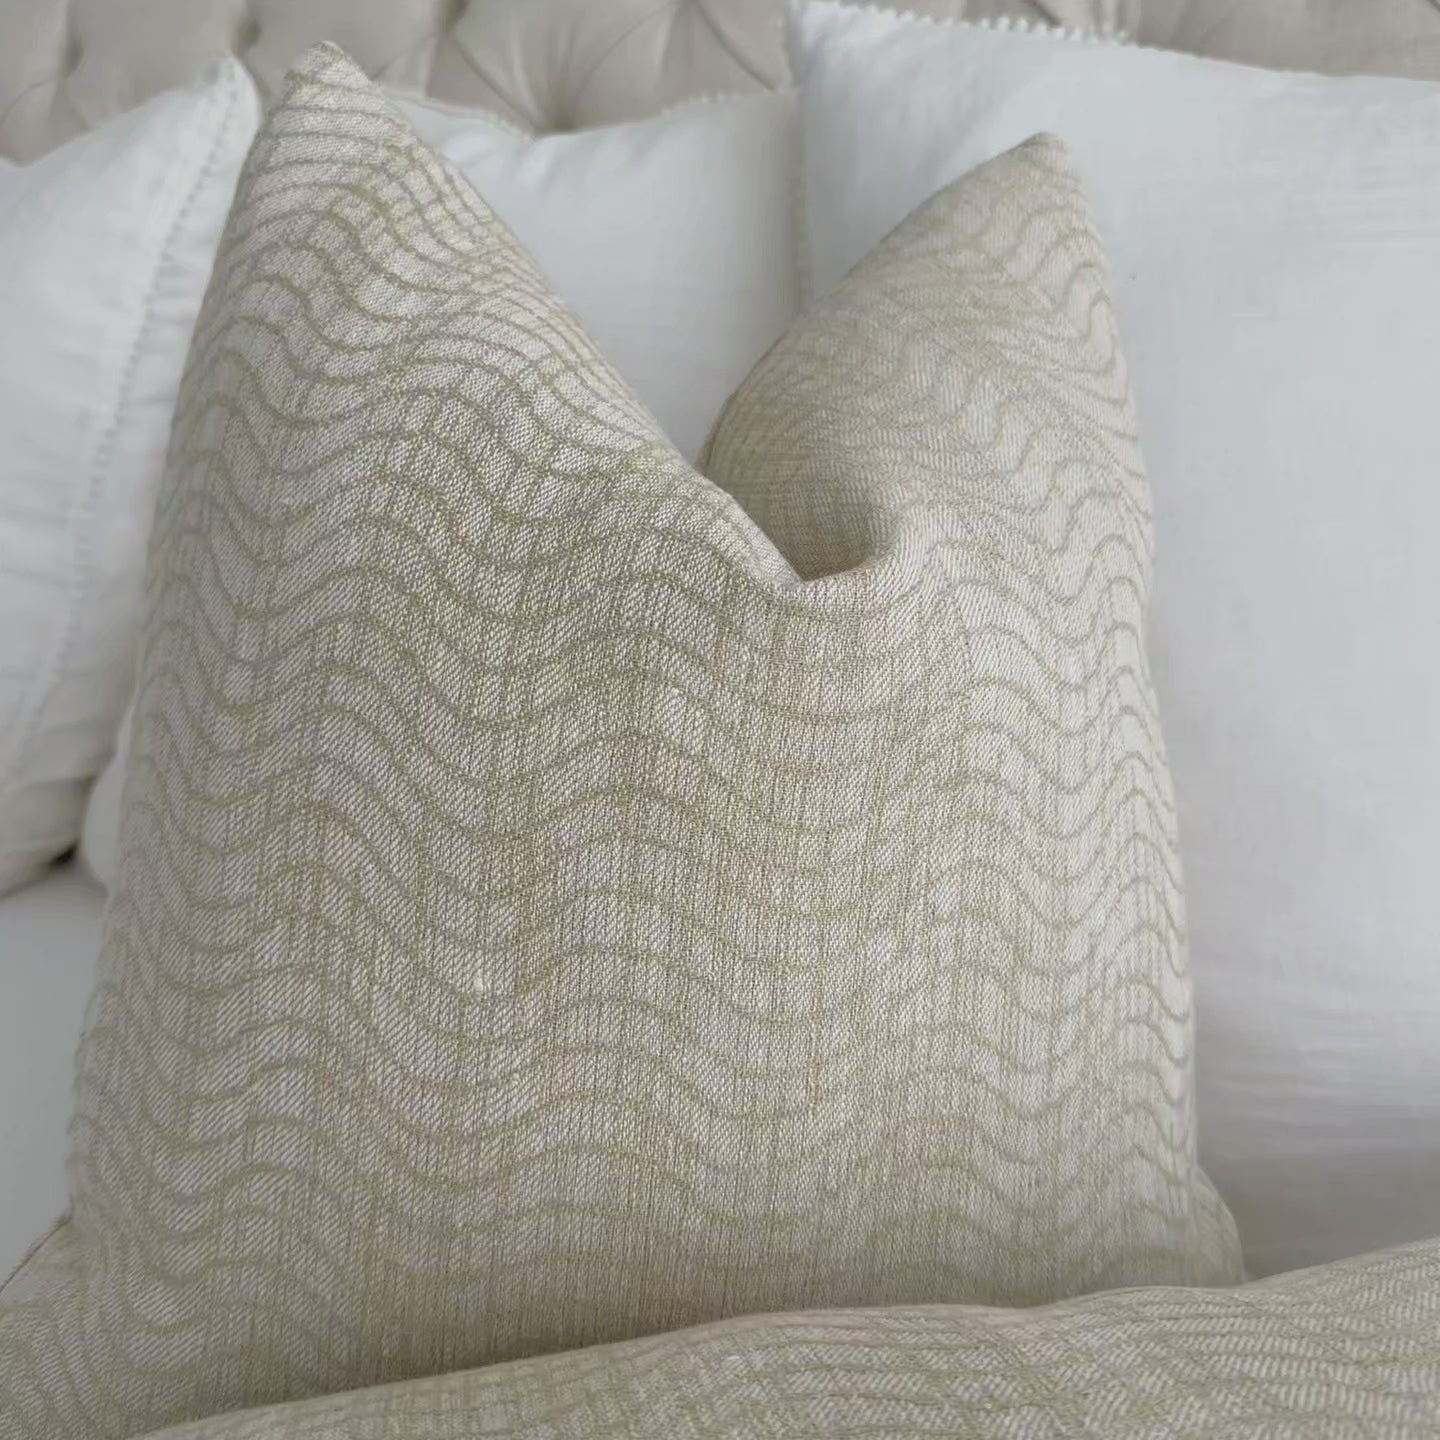 Kelly Wearstler Lee Jofa Dadami Honey Tan Woven Linen Striped Designer Throw Pillow Cover Product Video